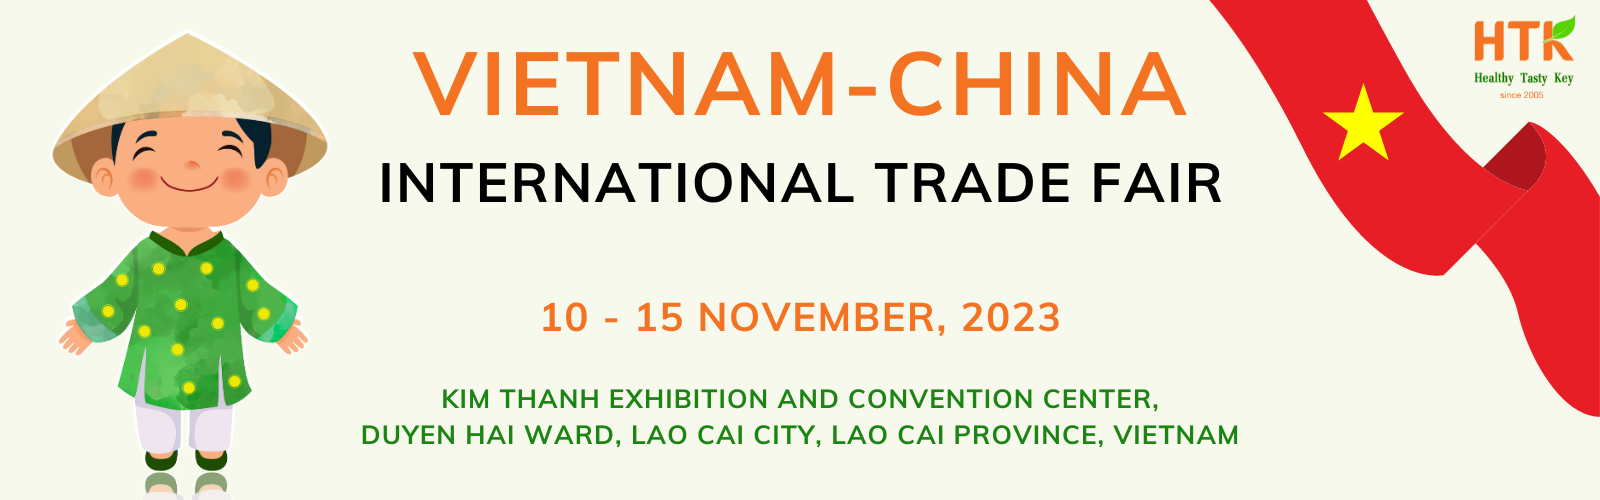 Vietnam China International Trade Fair 2023